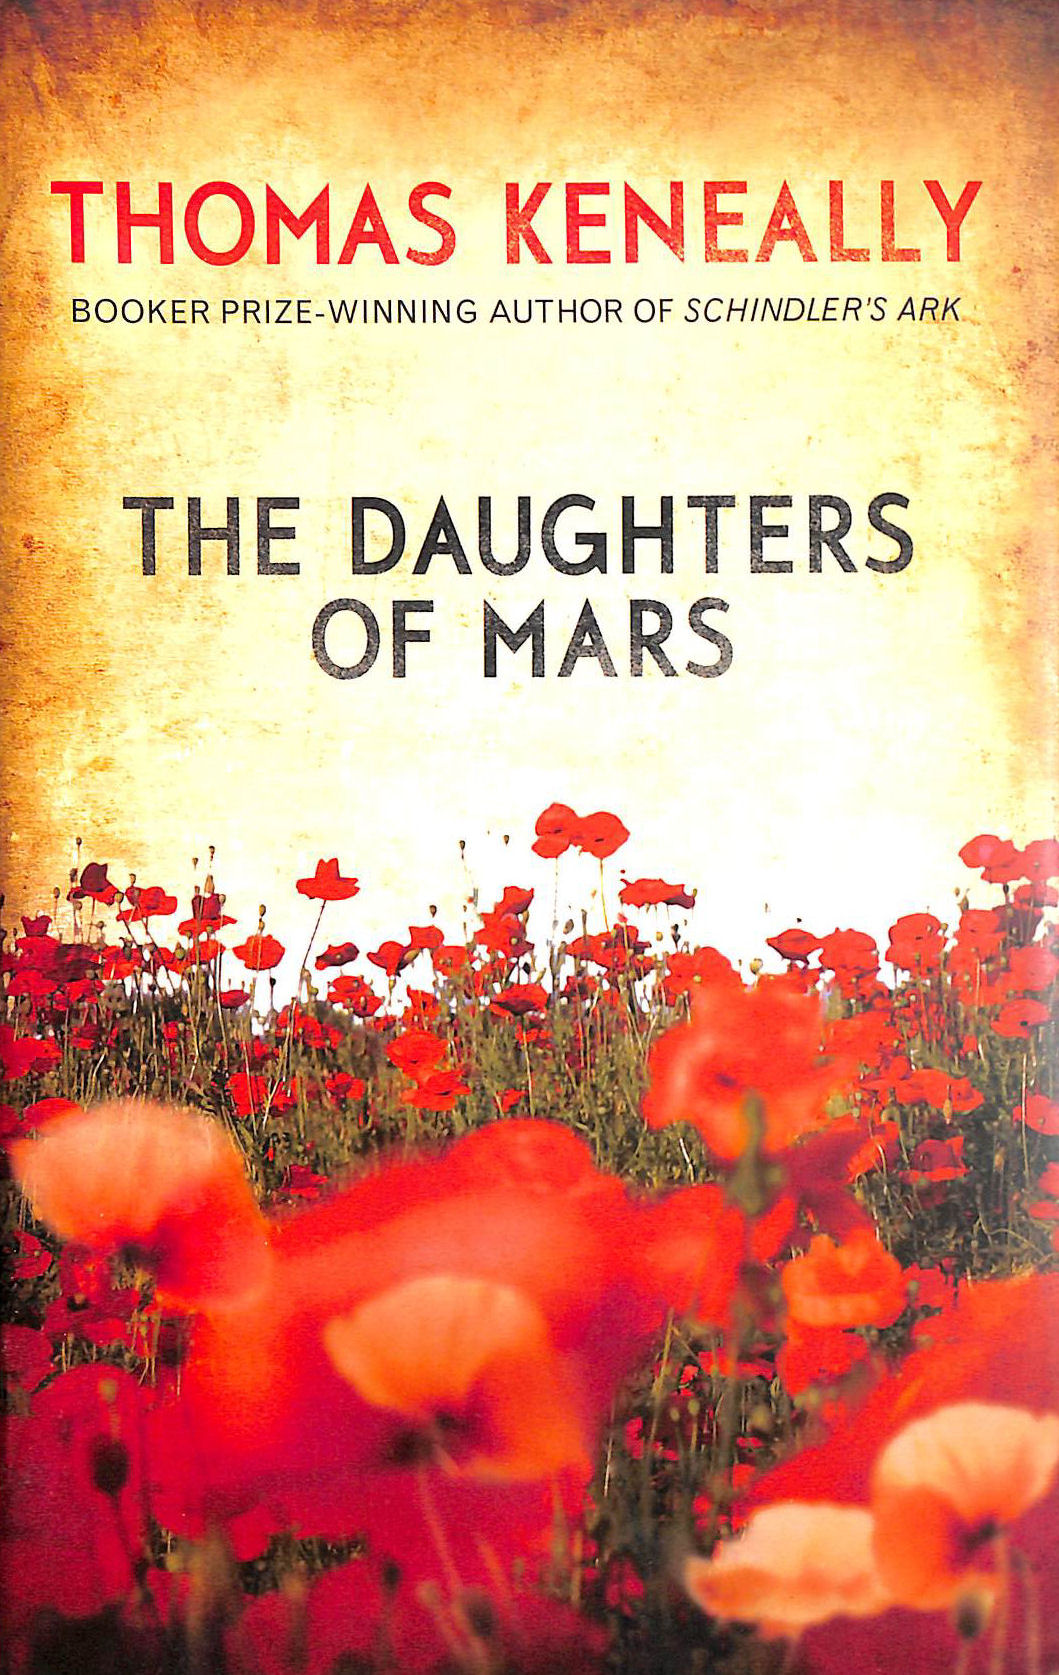 KENEALLY, THOMAS - The Daughters of Mars